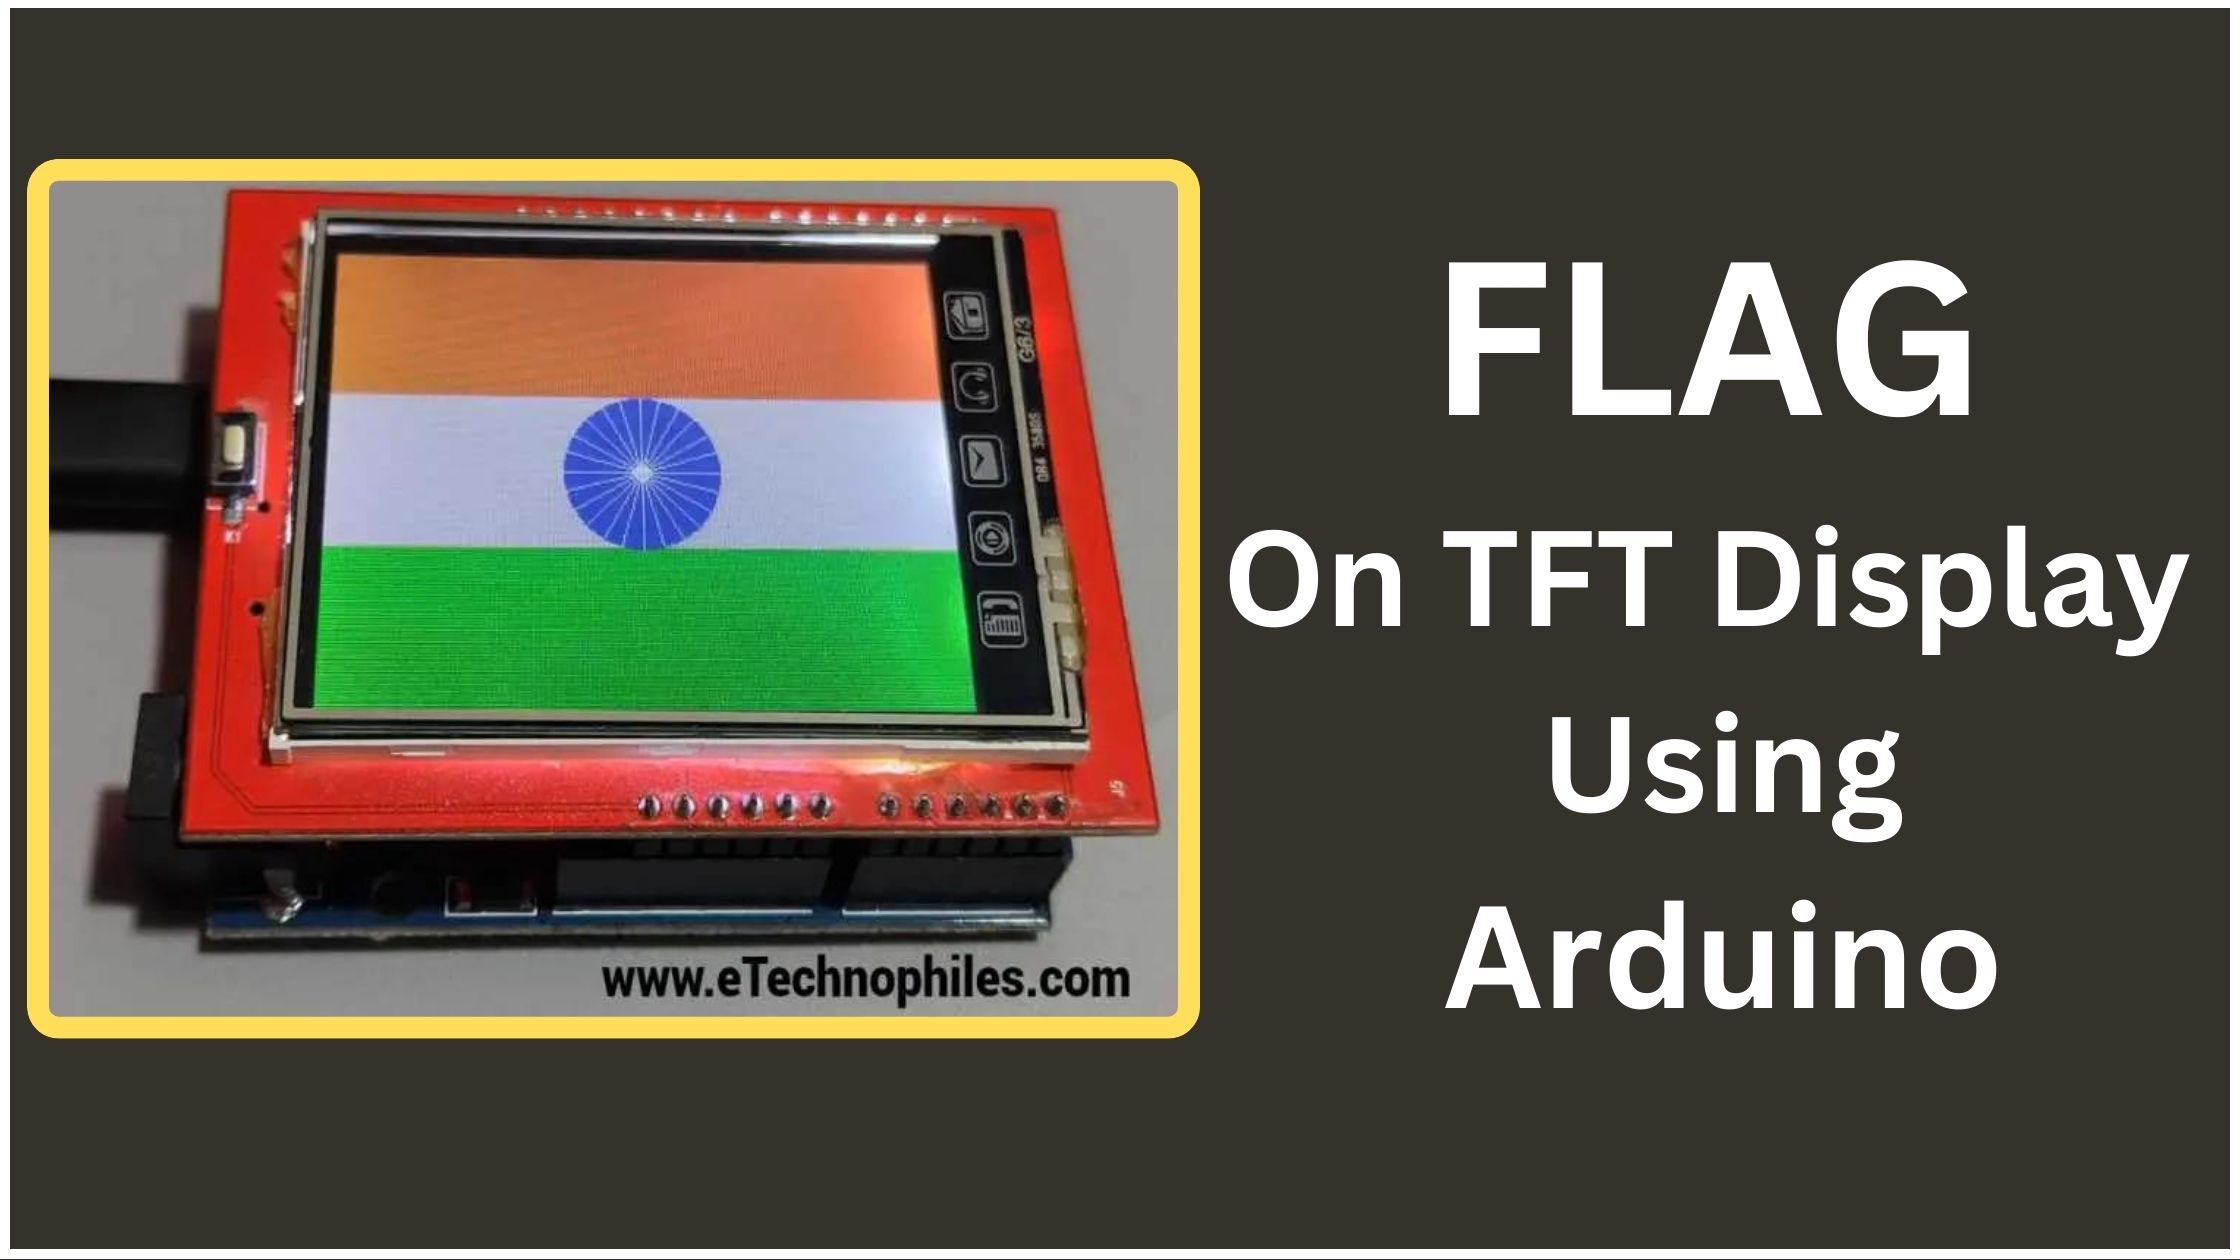 FLAG on TFT display using arduino